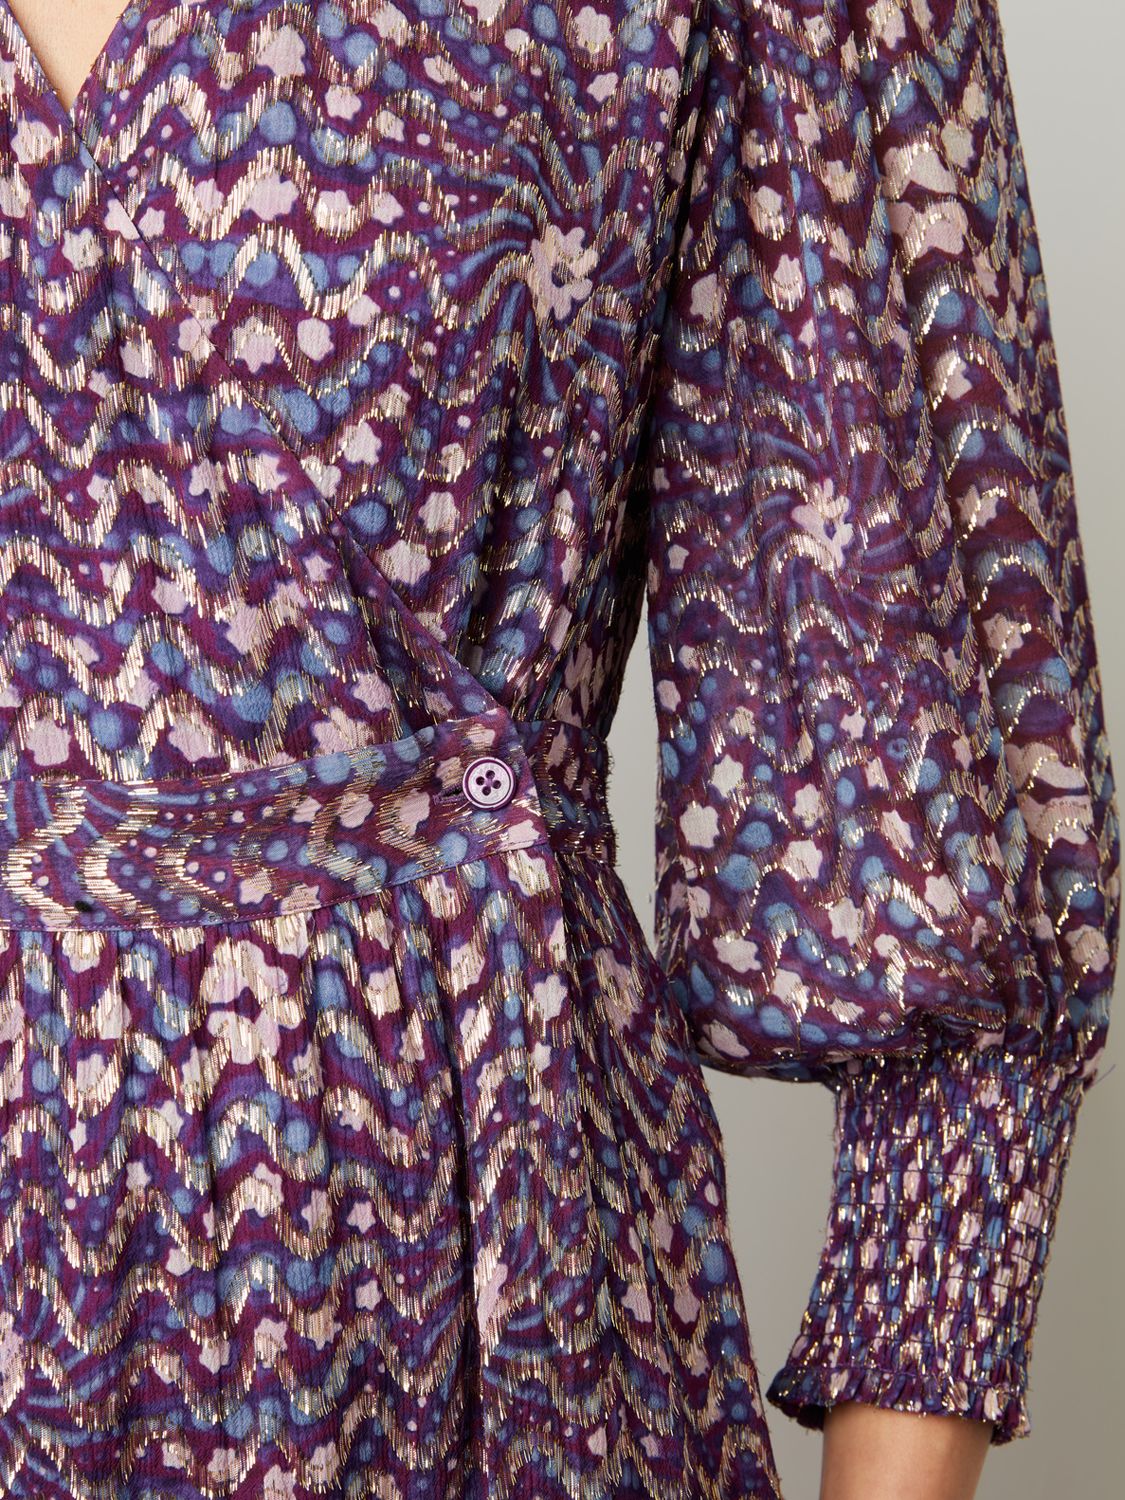 Gerard Darel Enza Metallic Print Midi Wrap Dress, Purple/Multi, 10